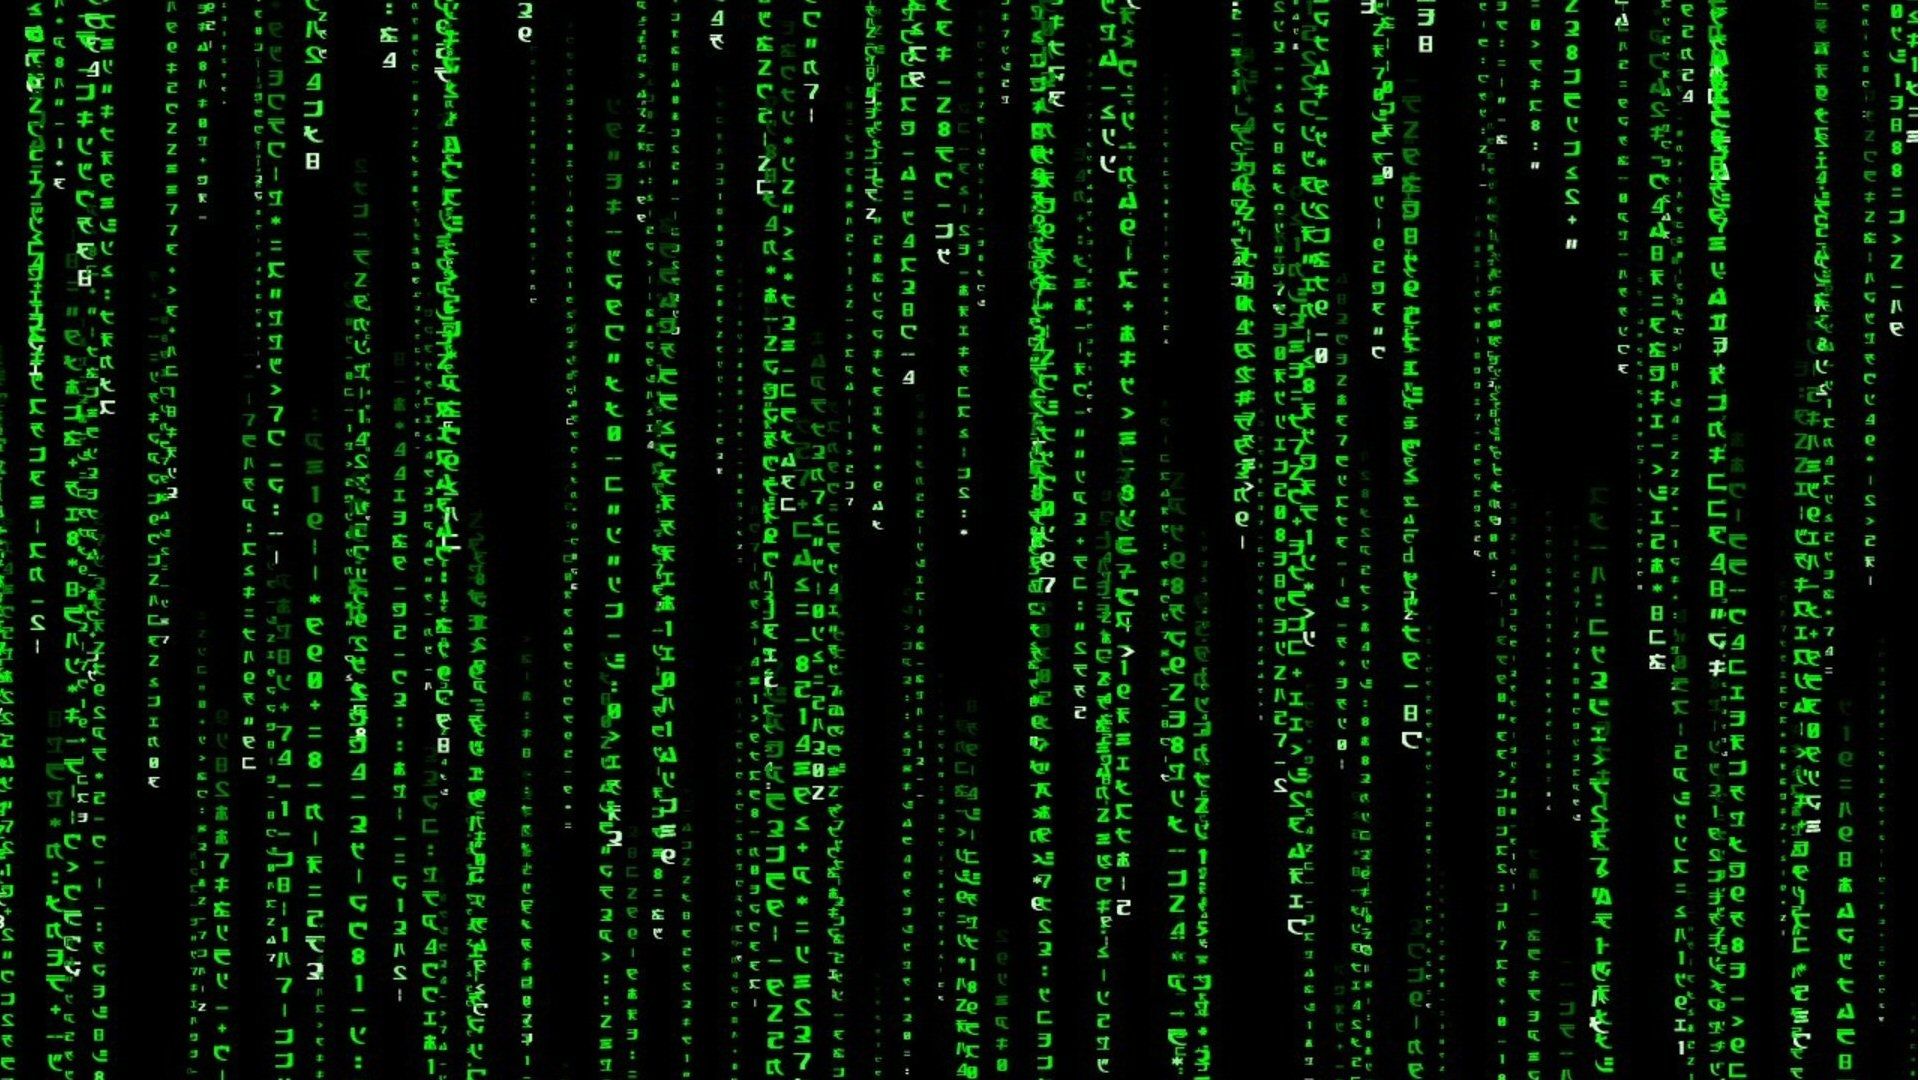 Matrix The Matrix Movies Code Abstract 1920x1080